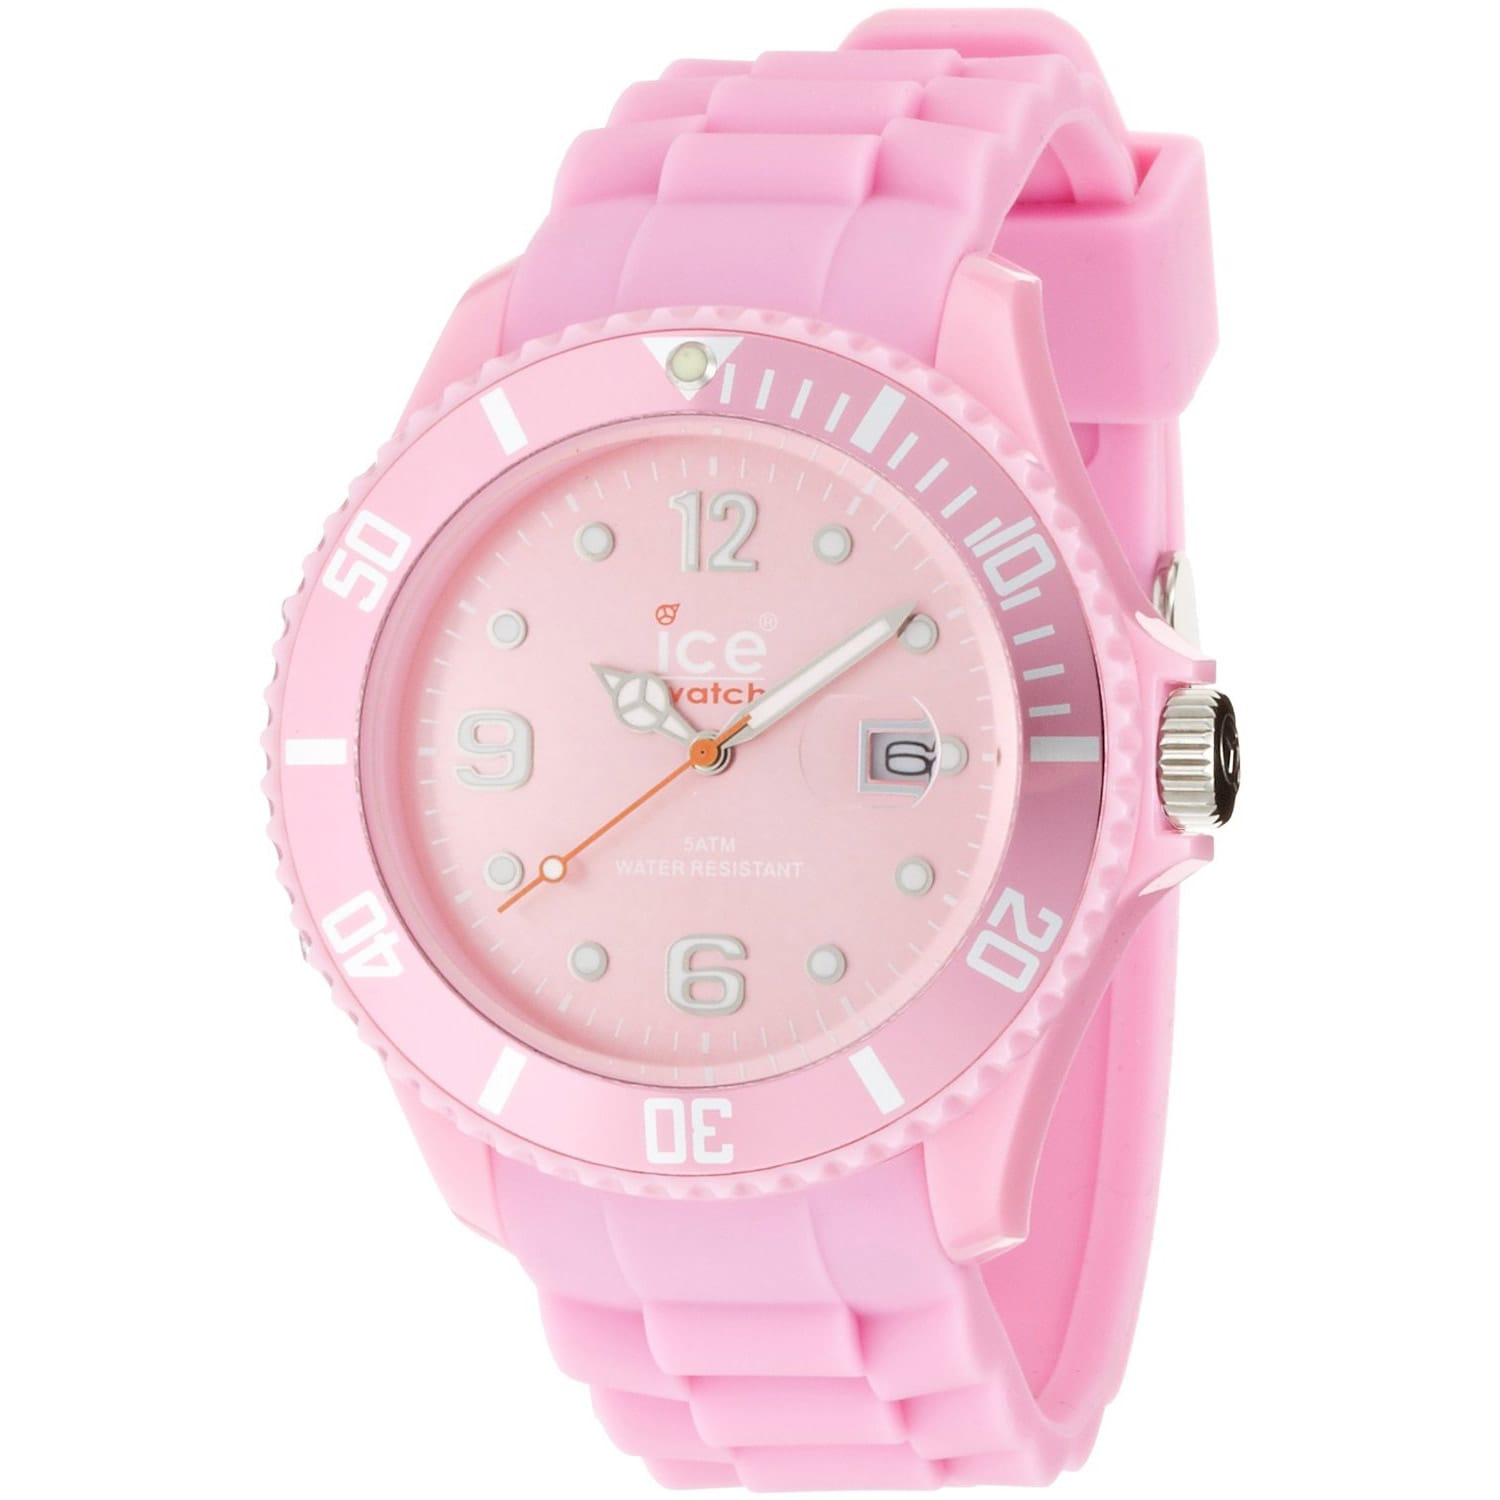 Розовый циферблат. Часы Ice watch Unisex. Часы Ice розовые. Розовые часы Мазендерана. Часы Ice розовые Неоновые.